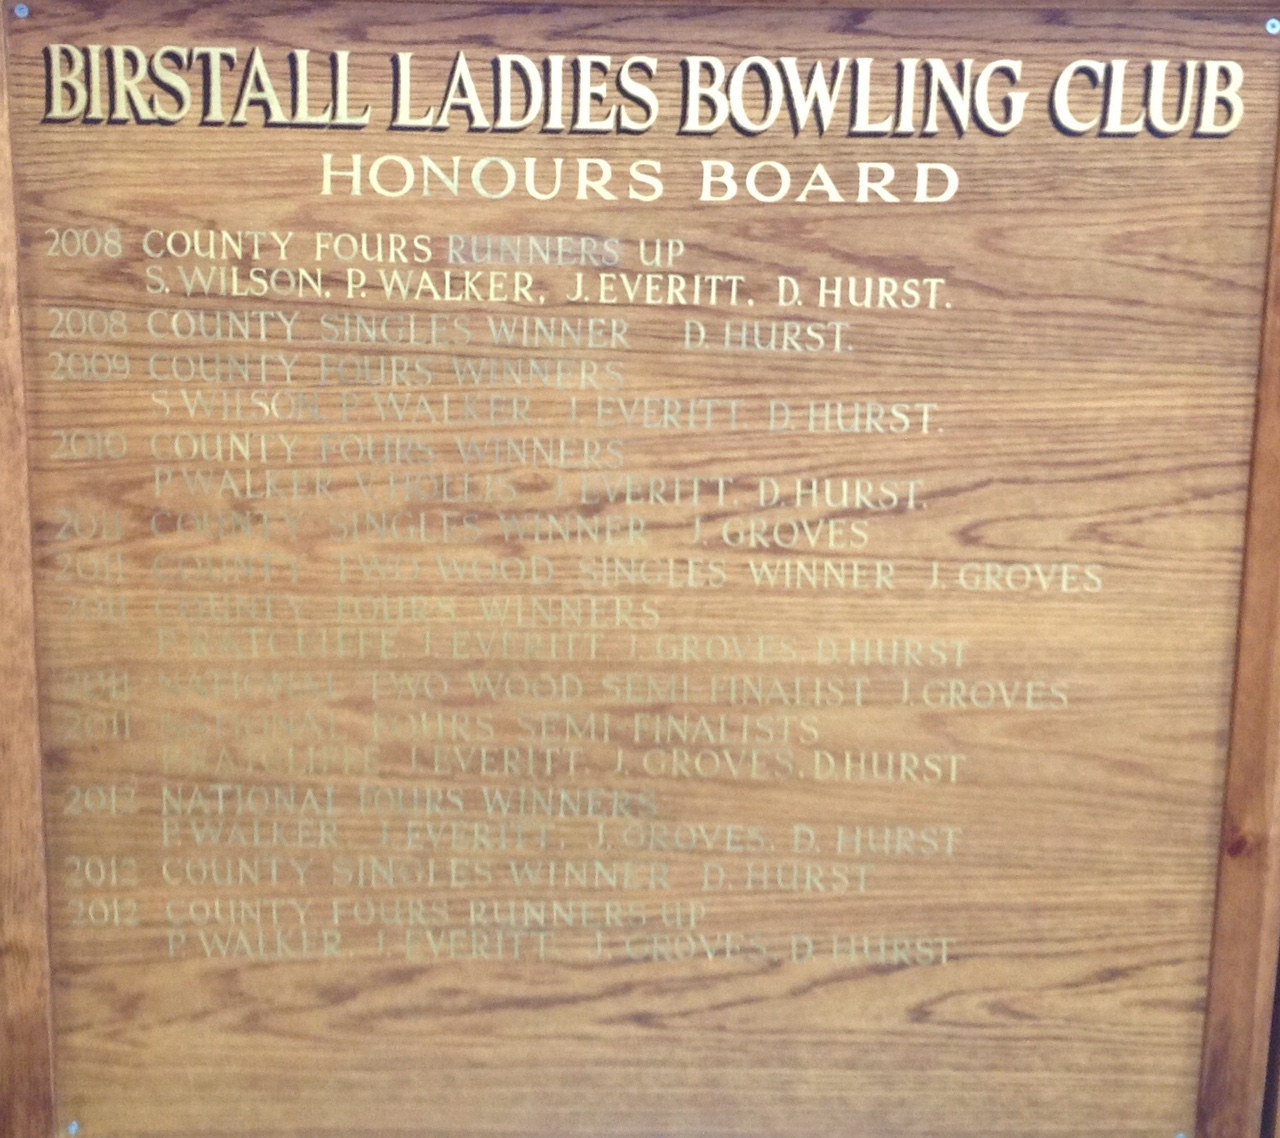 County Honours 2008-16 (Birstall Ladies)